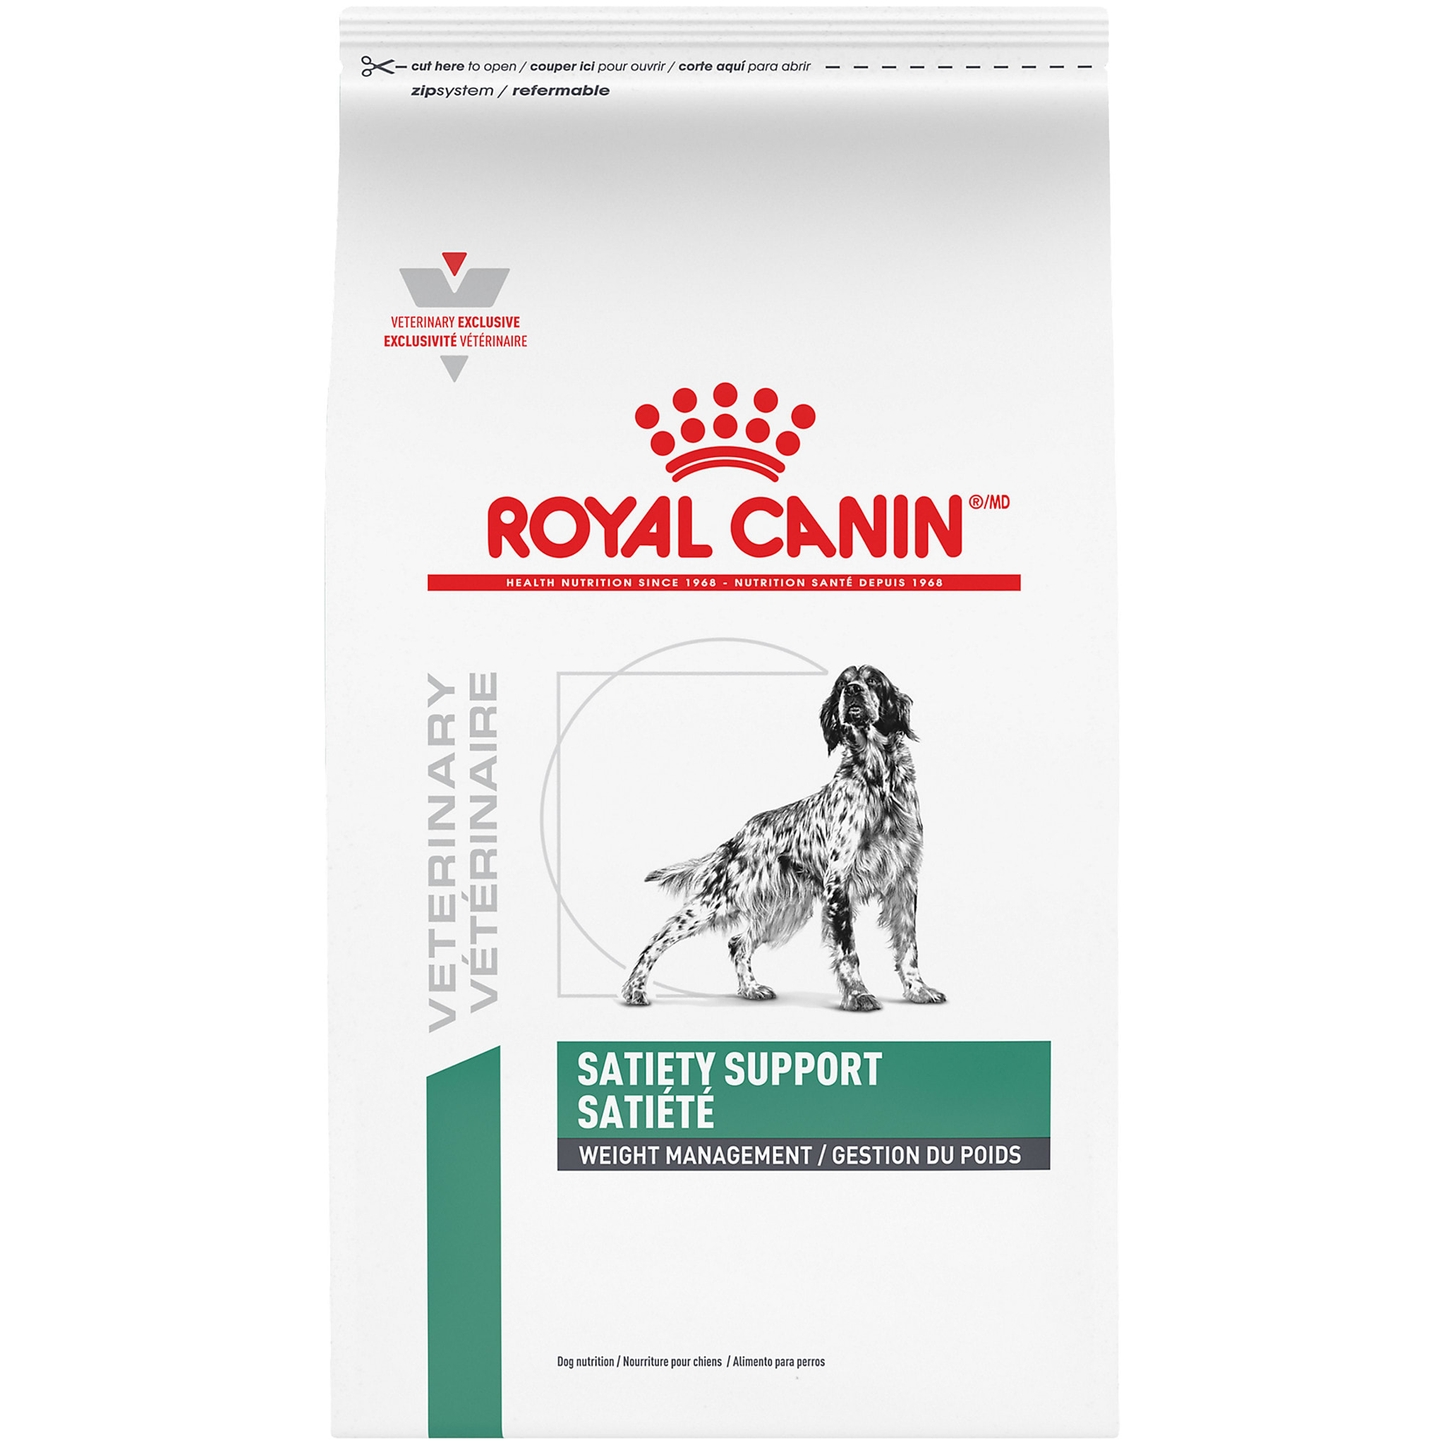 Royal Canin Satiety Canine (7.7lbs bag)